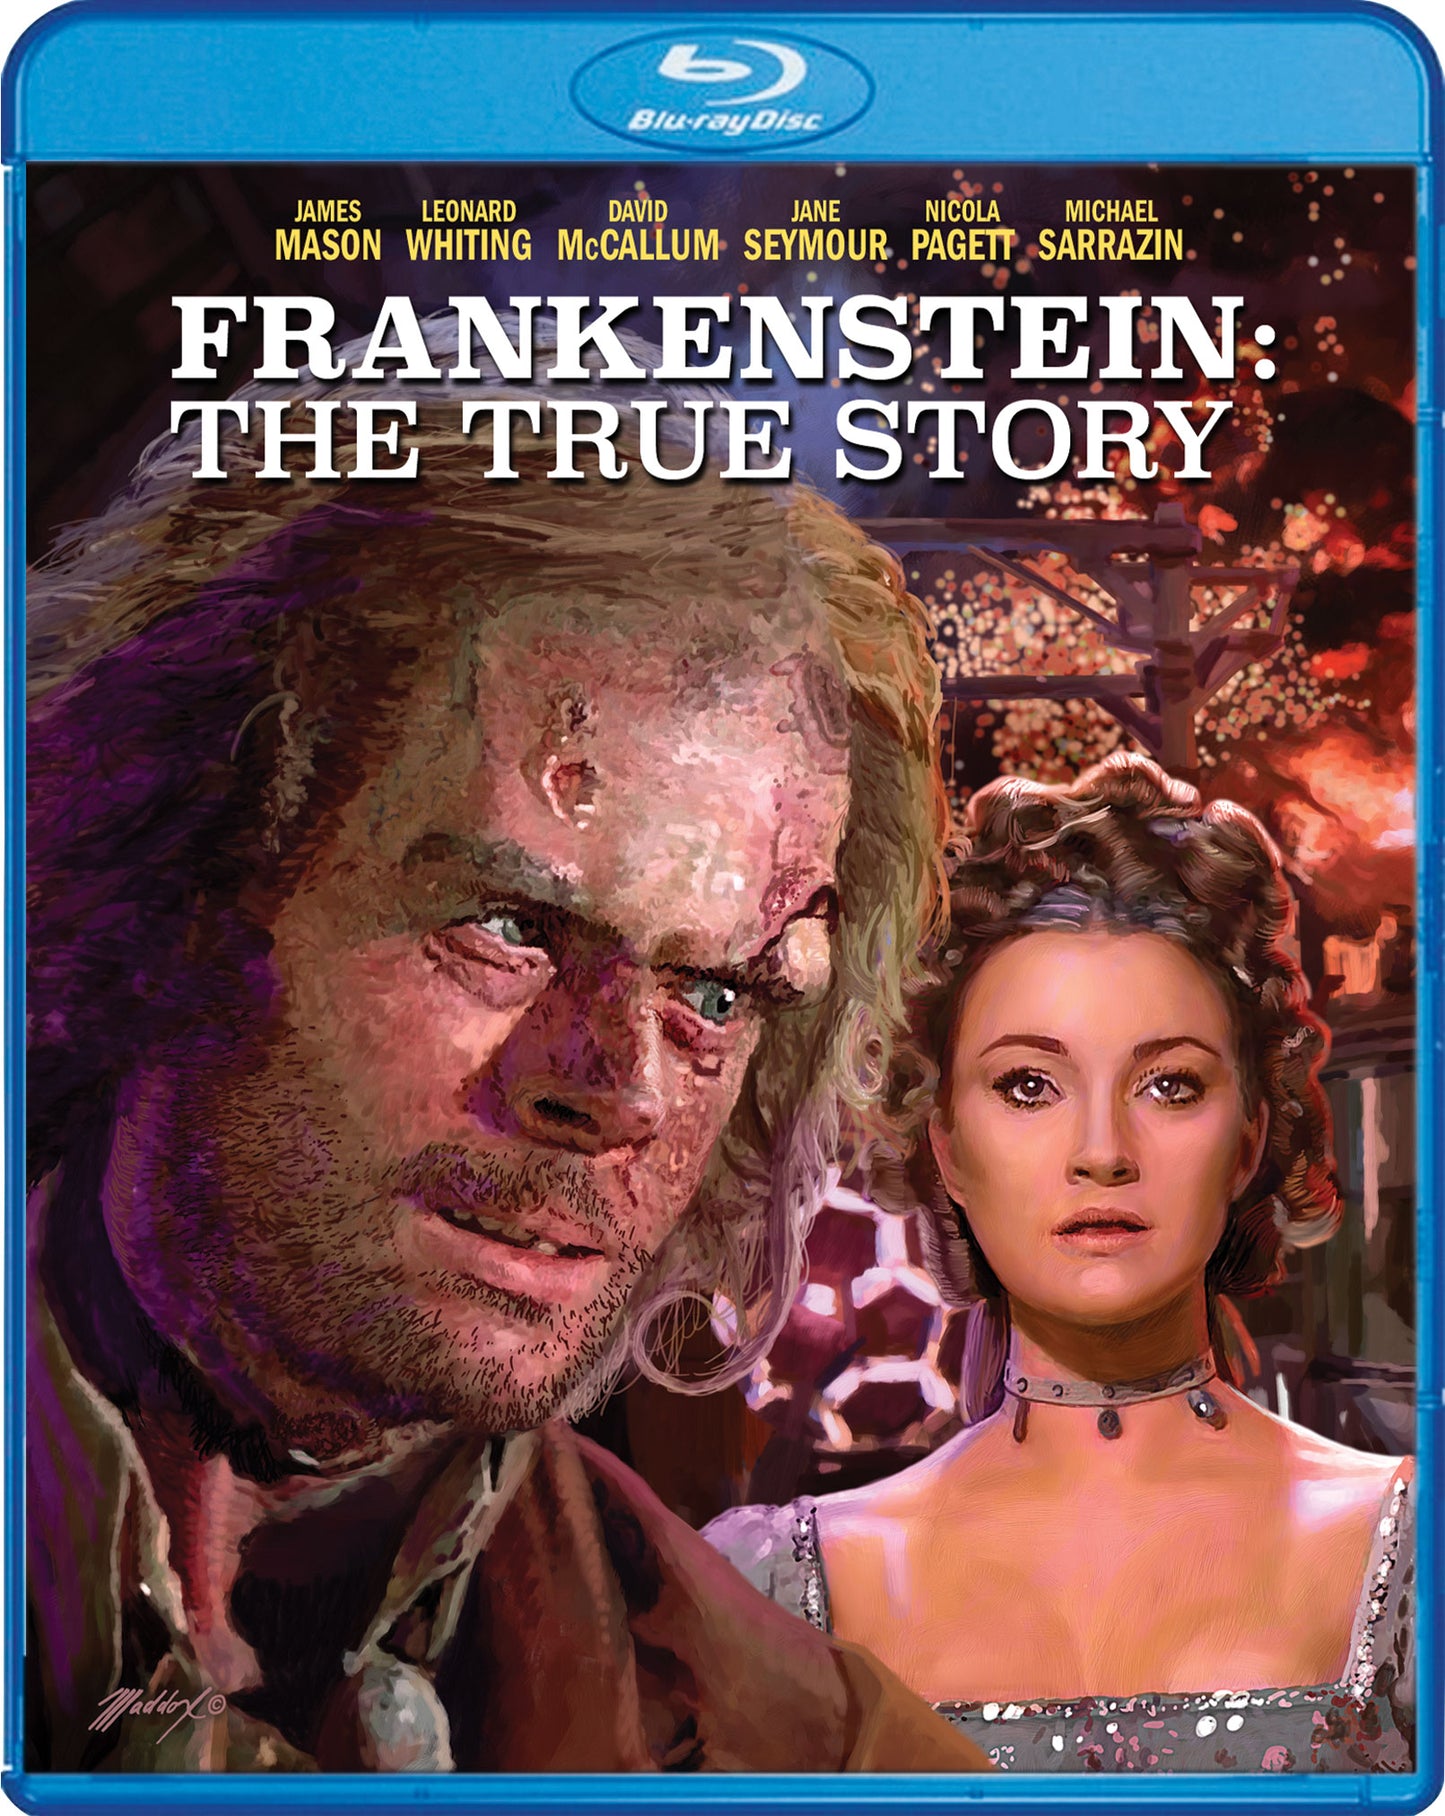 Frankenstein: The True Story [Blu-ray] cover art